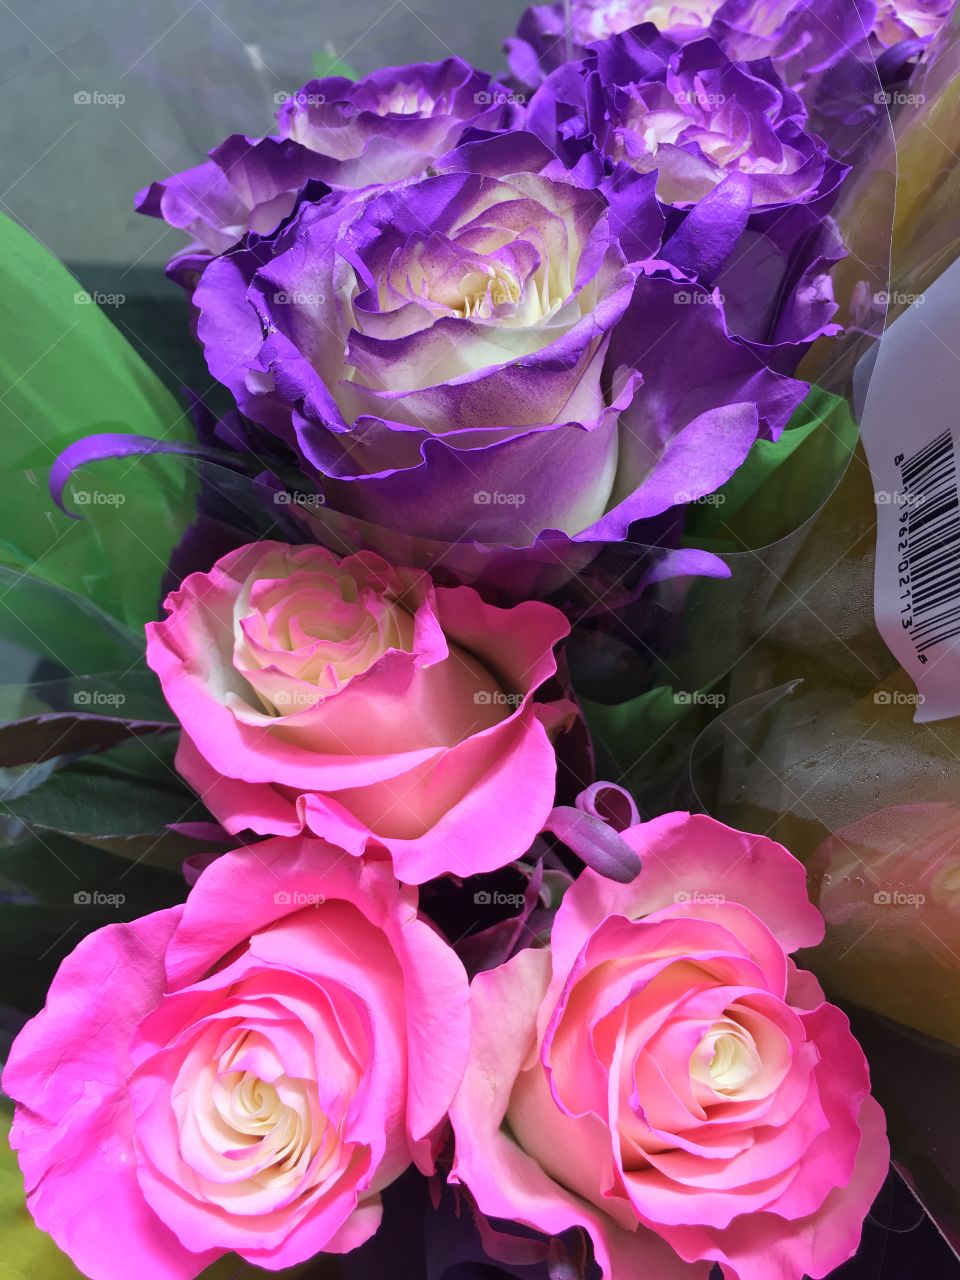 Multicolored roses.